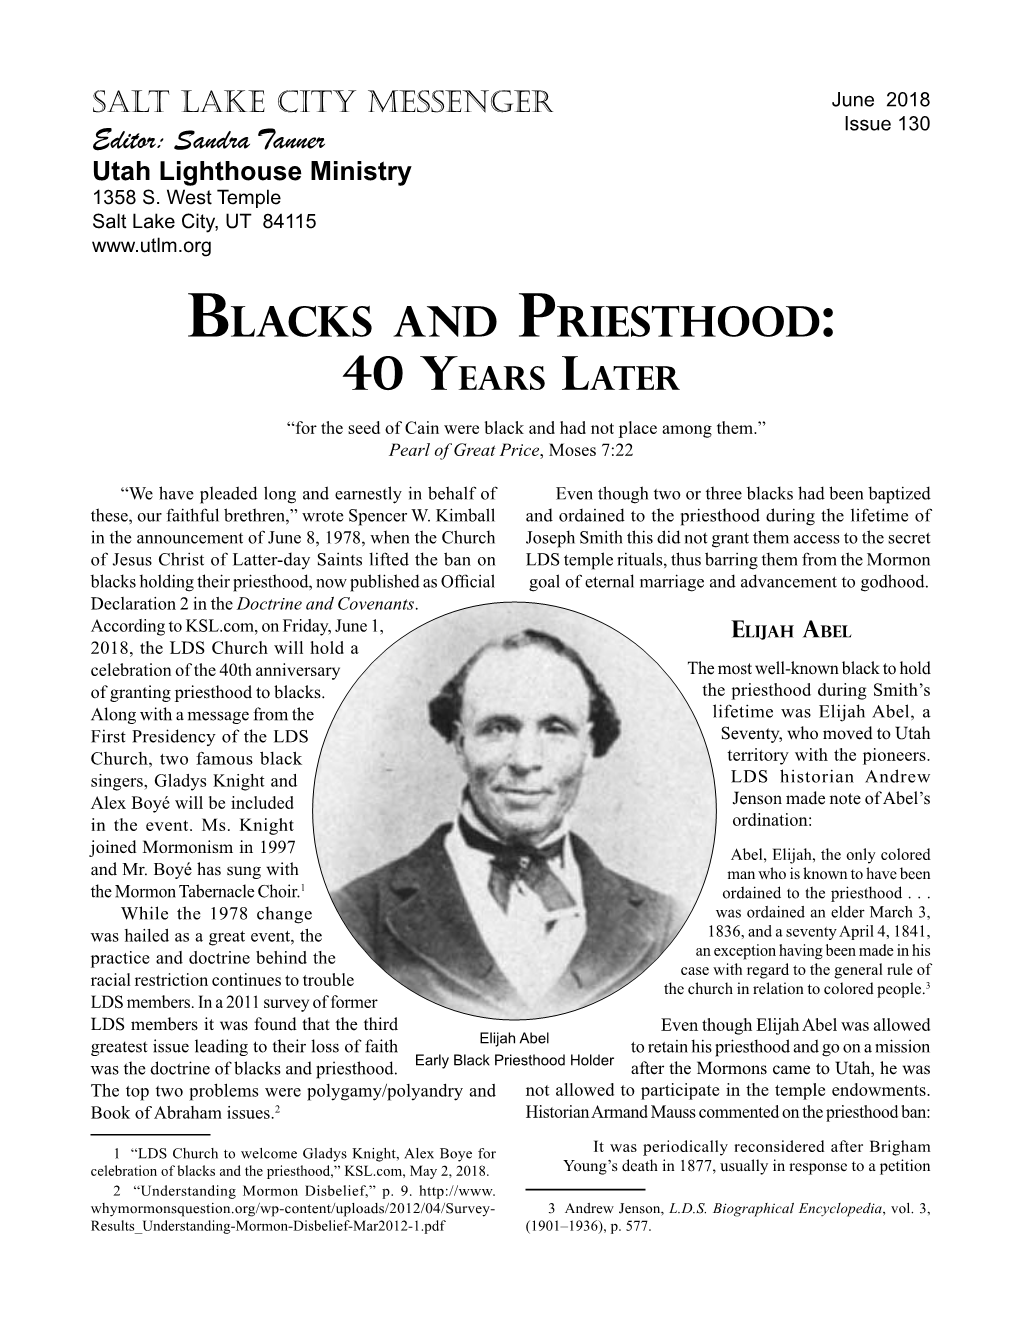 Blacks and Priesthood: 40 Years Later